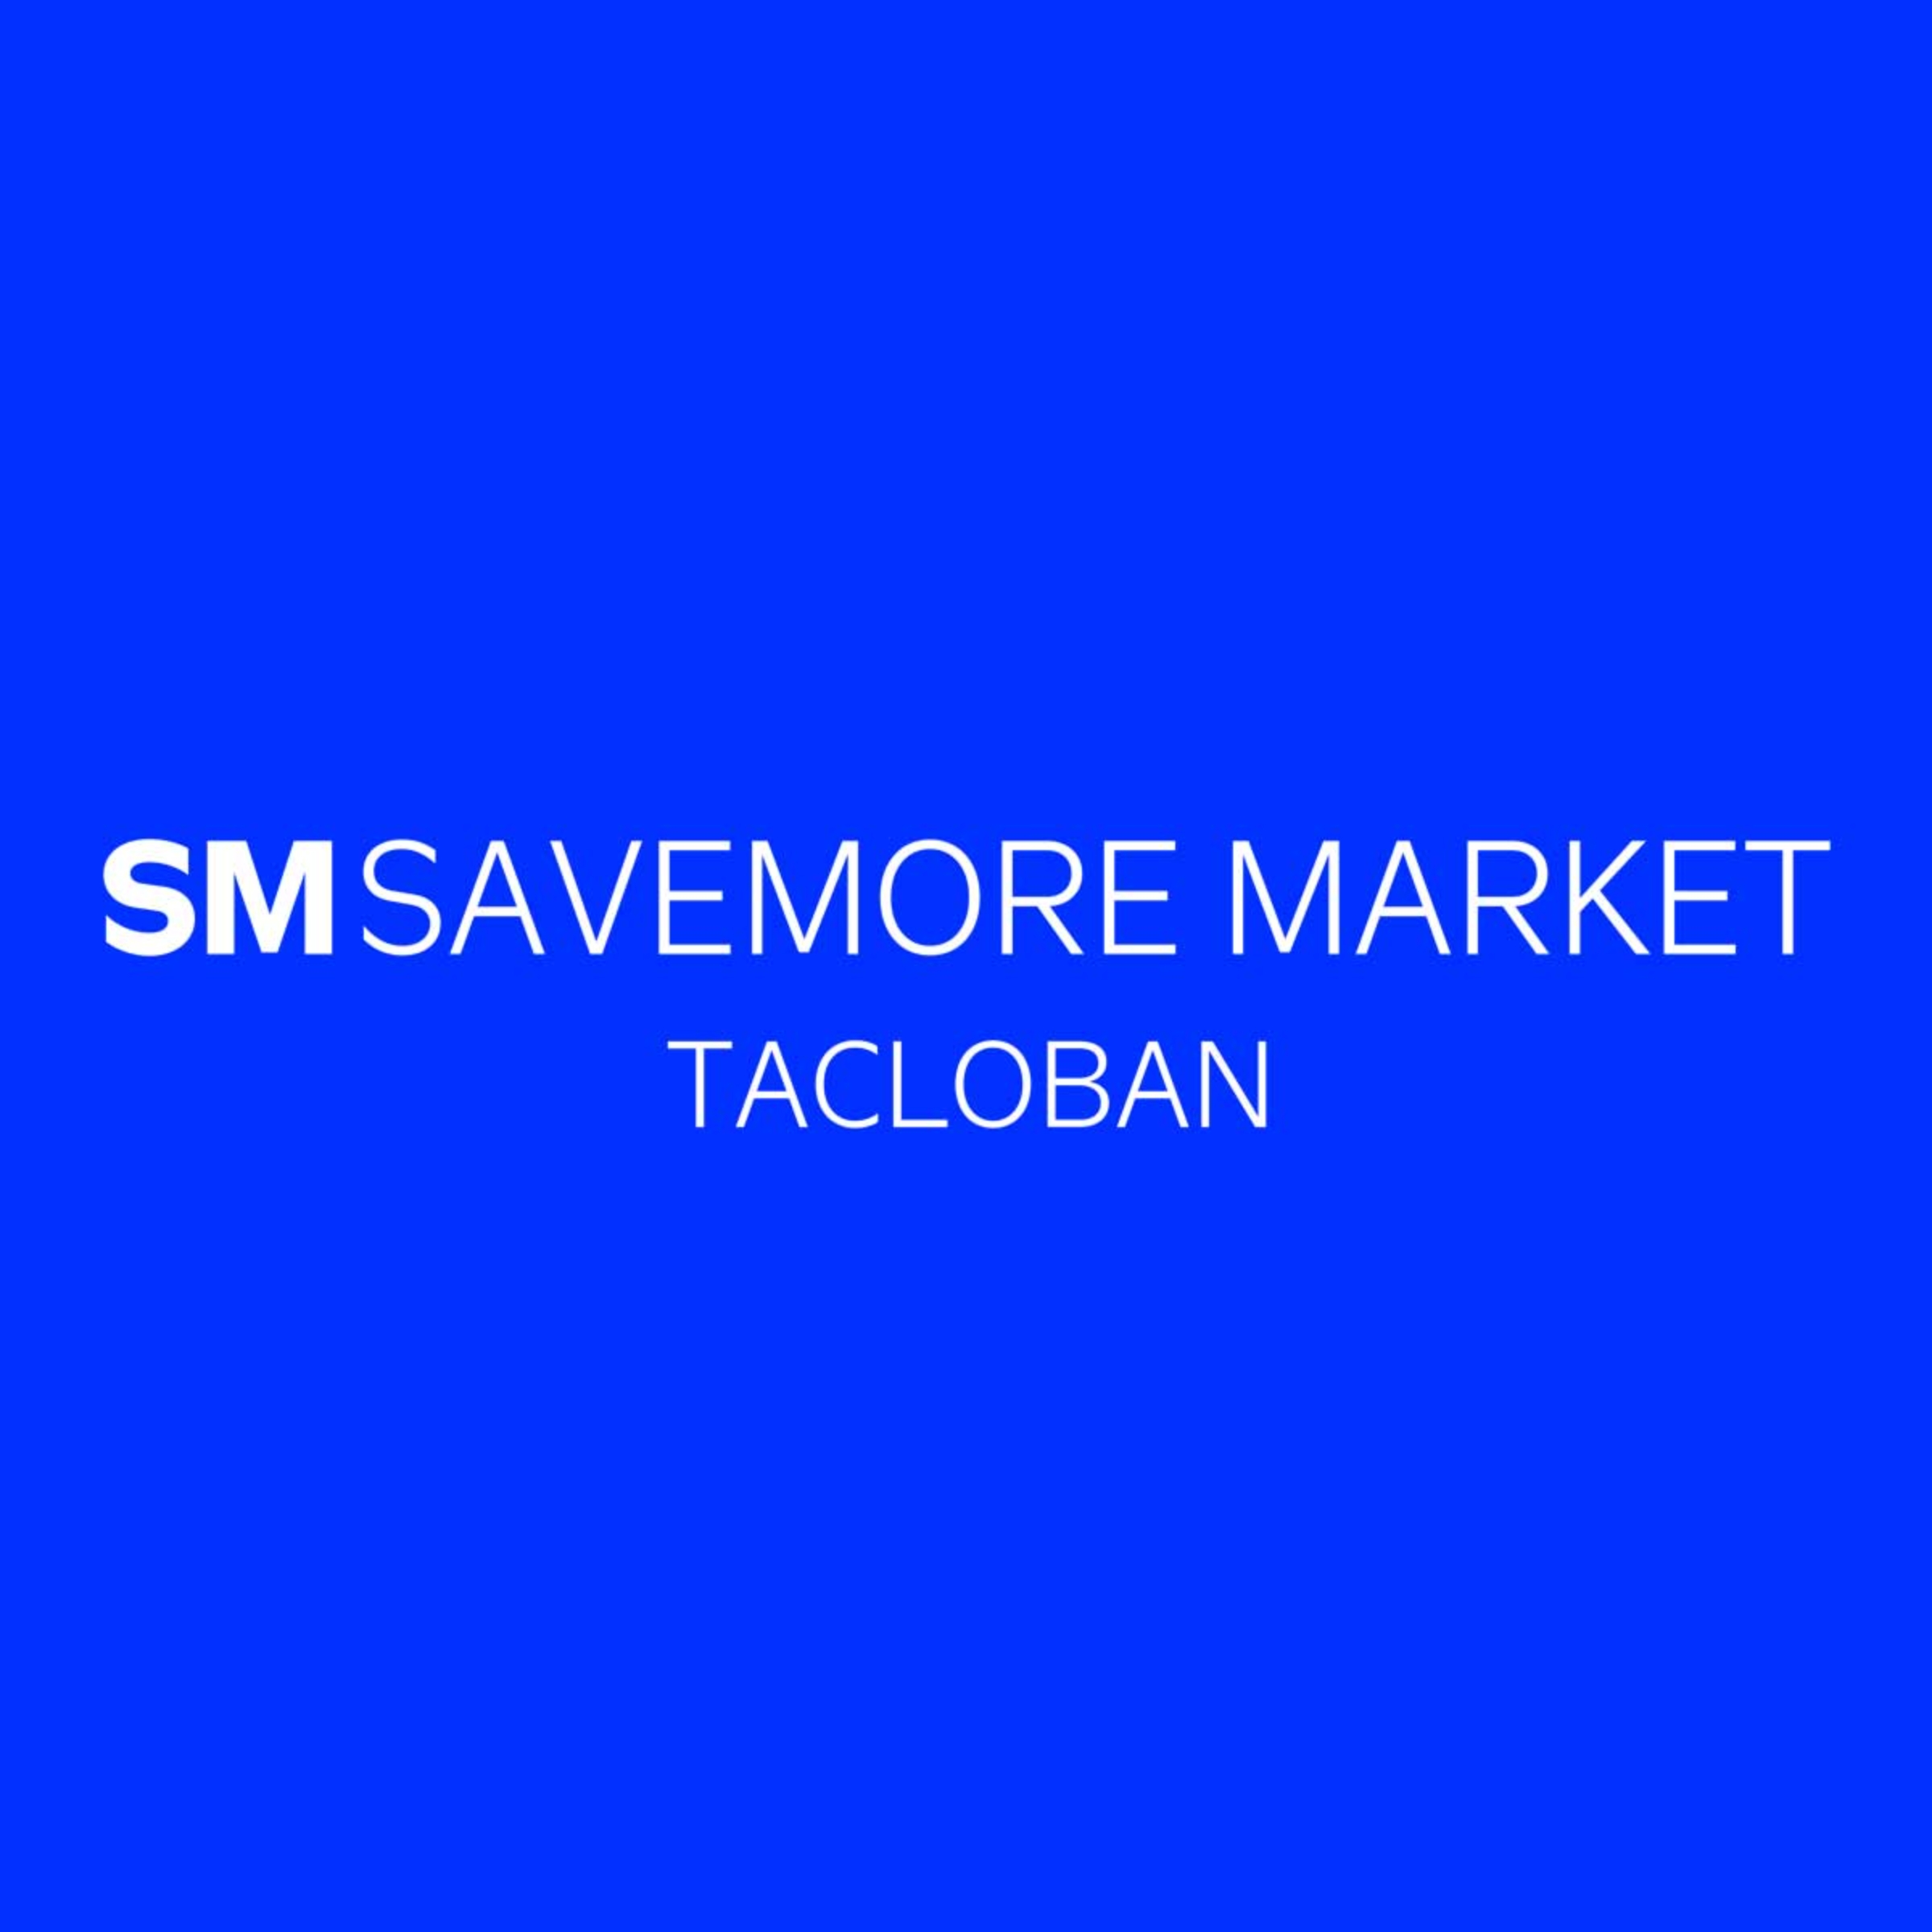 SM Savemore Tacloban